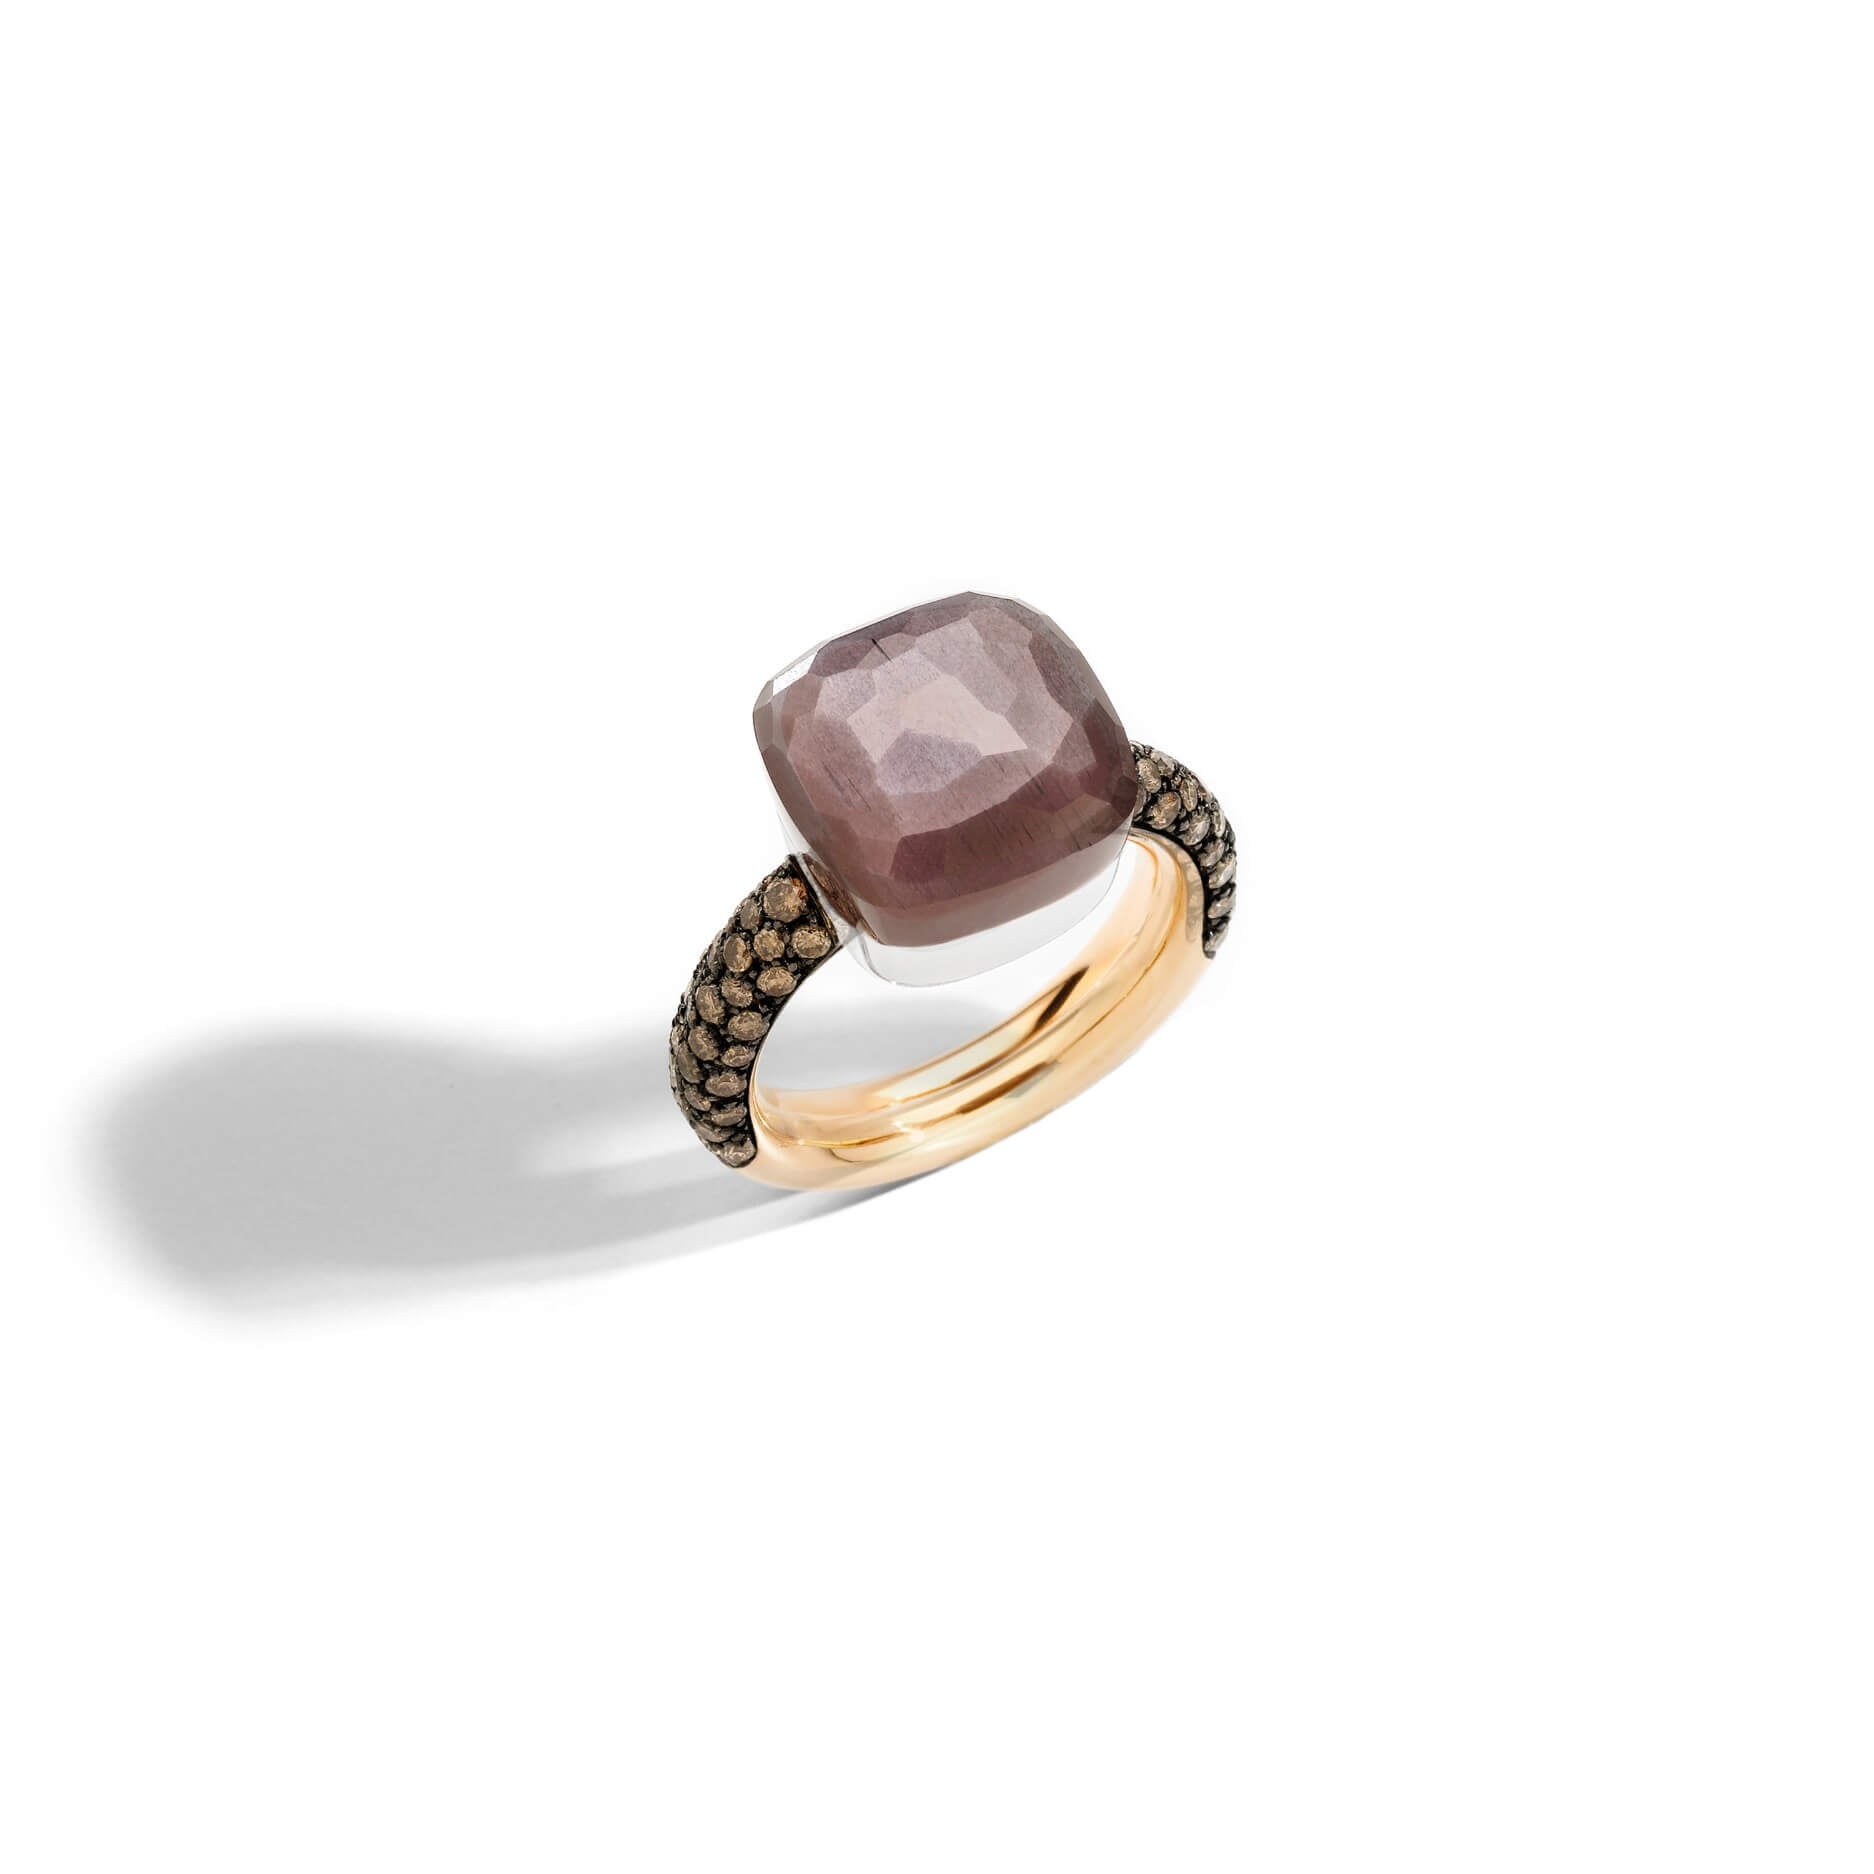 Pomellato Nudo Maxi Ring in 18k Gold with Dark Moonstone and Browns Diamonds - Orsini Jewellers